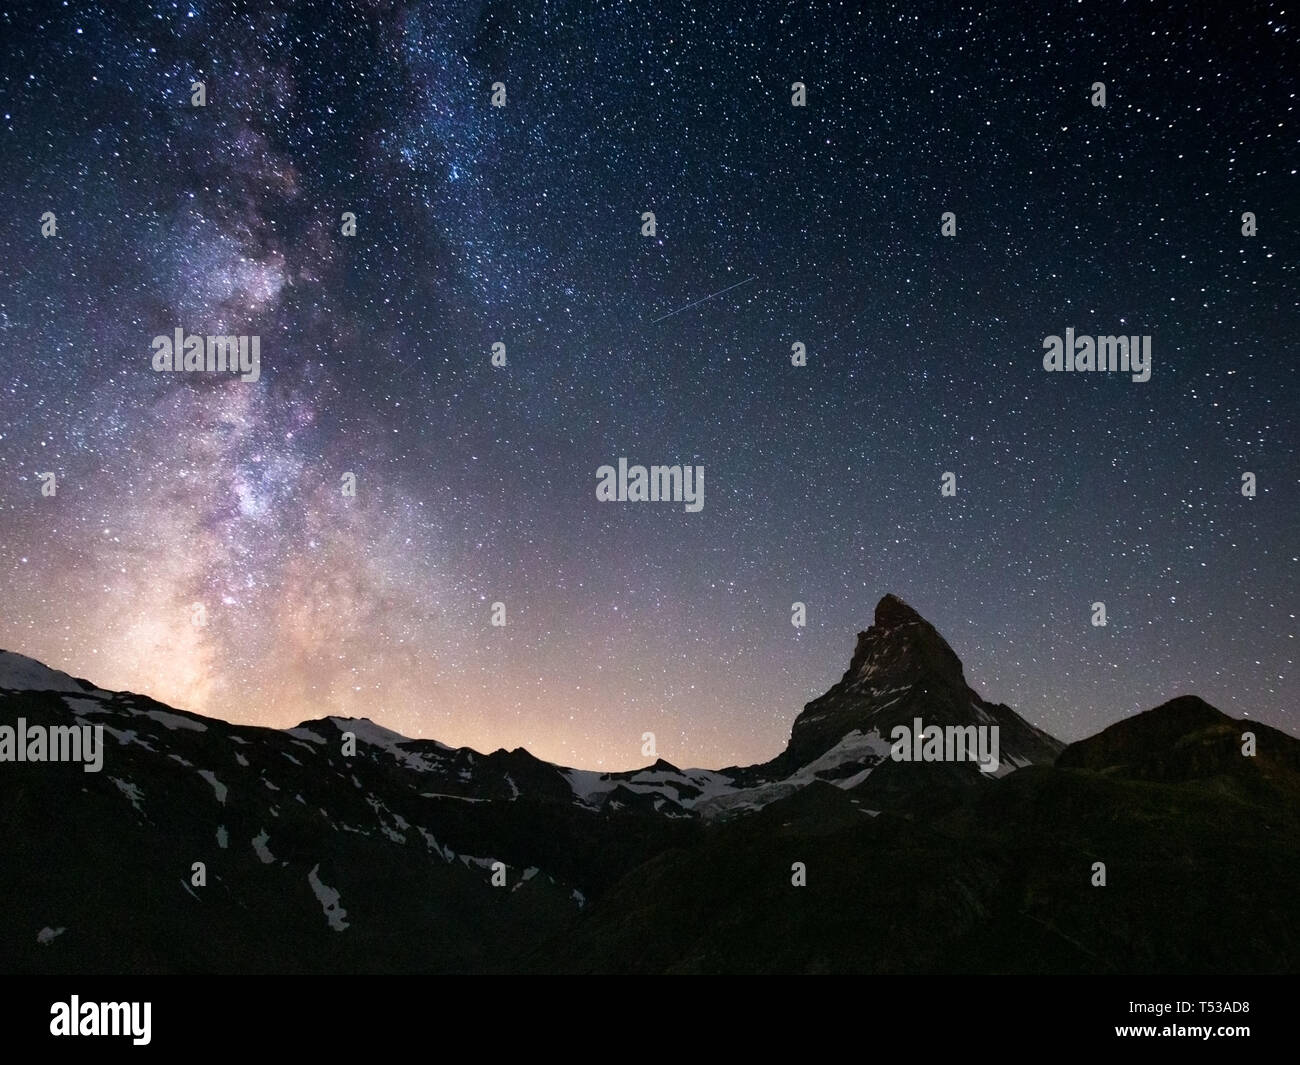 Starry sky, Milky Way. Night landscape. Matterhorn mountain massif (Cervino). Swiss Alps. Switzerland. Europe. Stock Photo